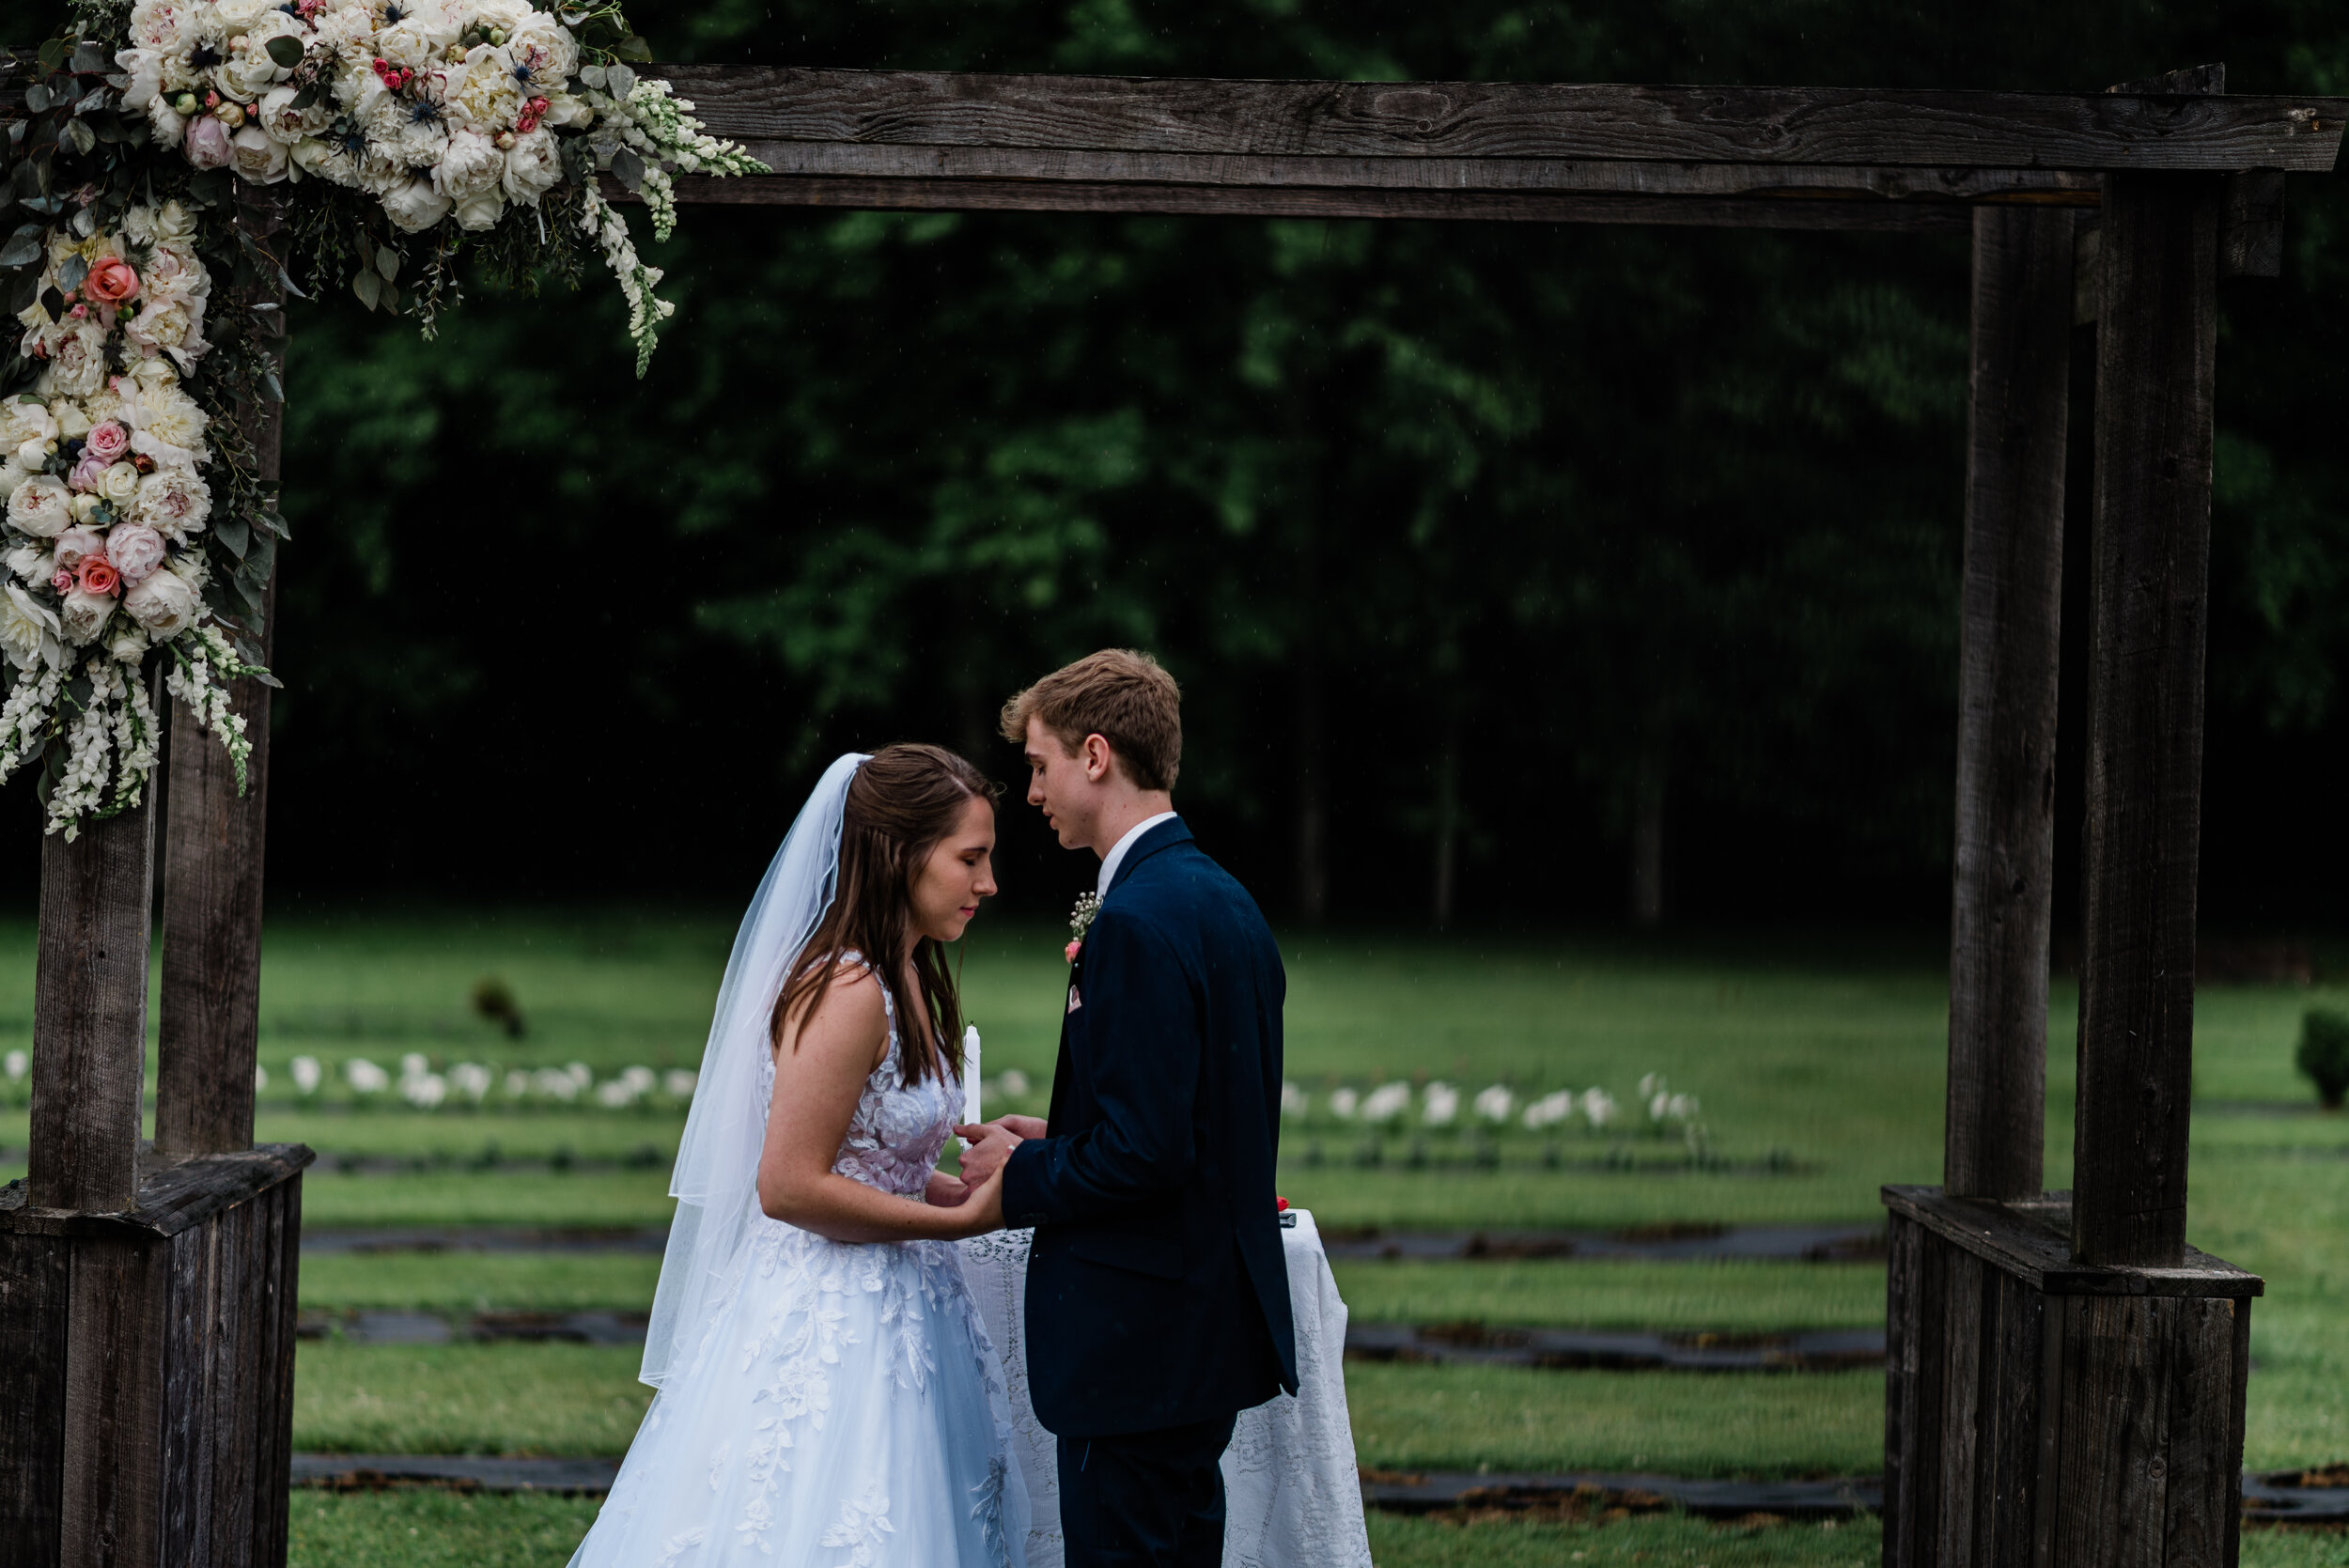 Zachary and Olivia wedding 3c's Farm Deming Washington -   (513).jpg